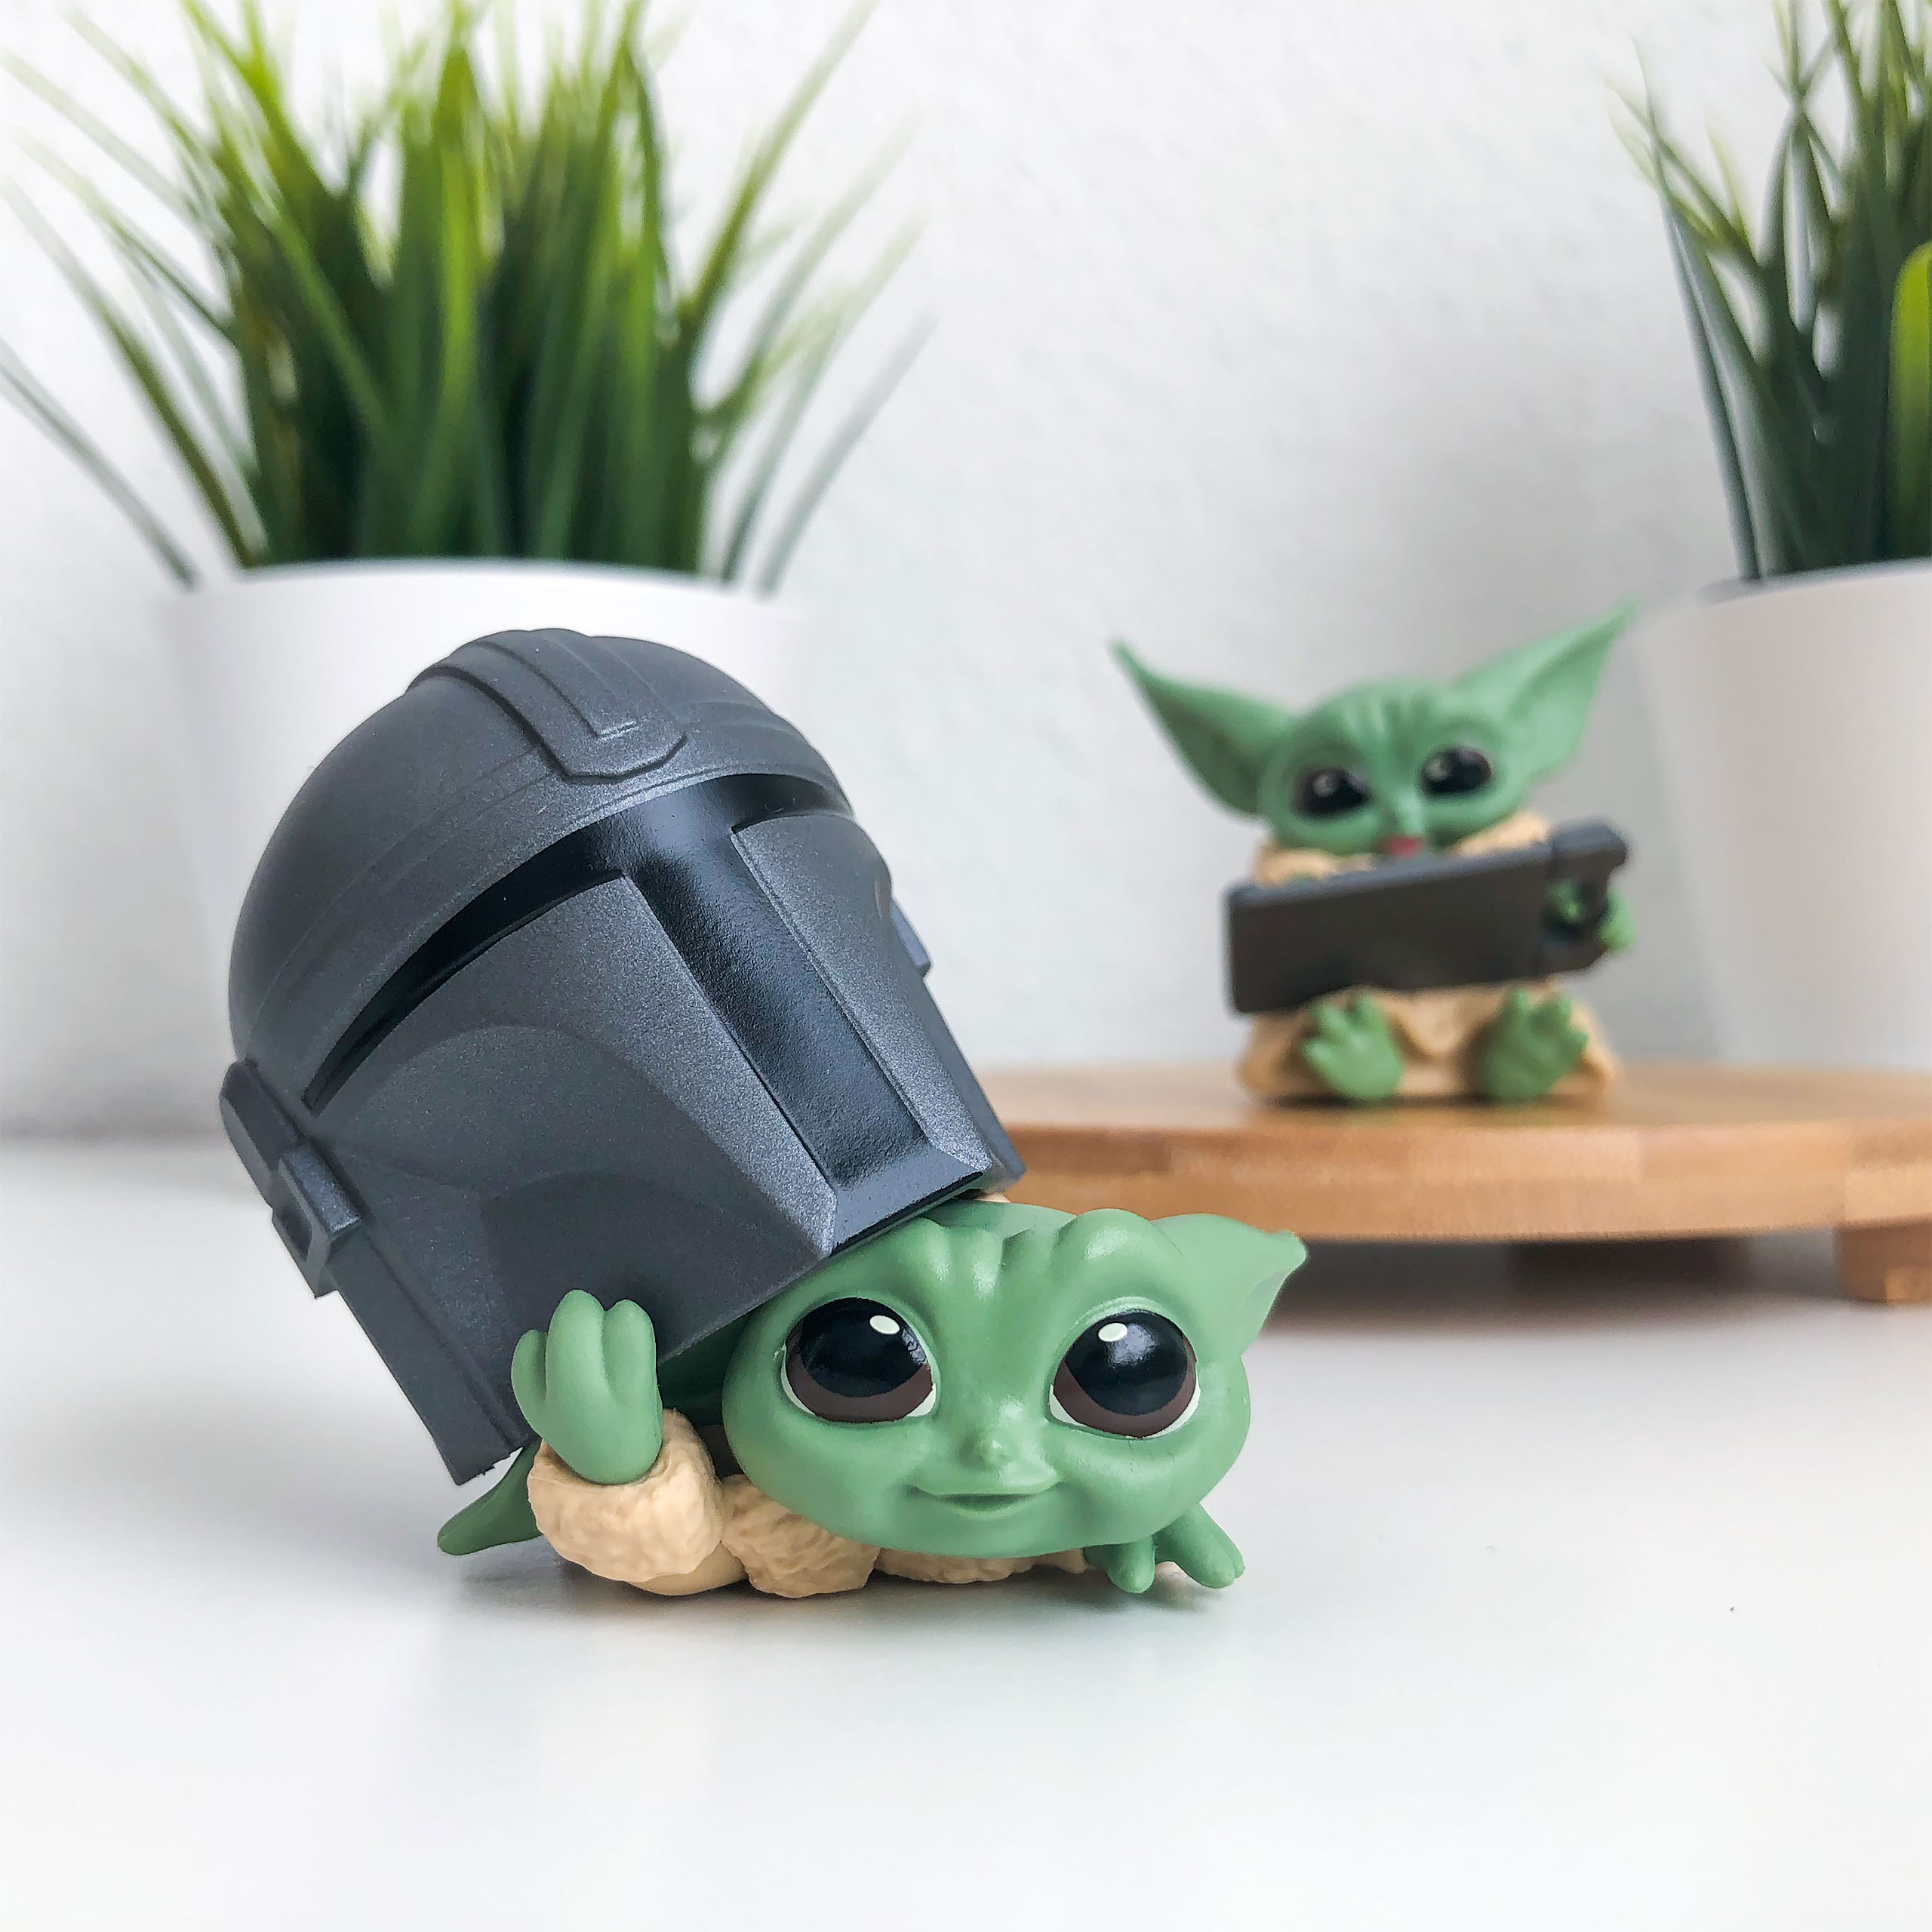 Grogu with Helmet and Tablet Mini Figure Set - Star Wars The Mandalorian